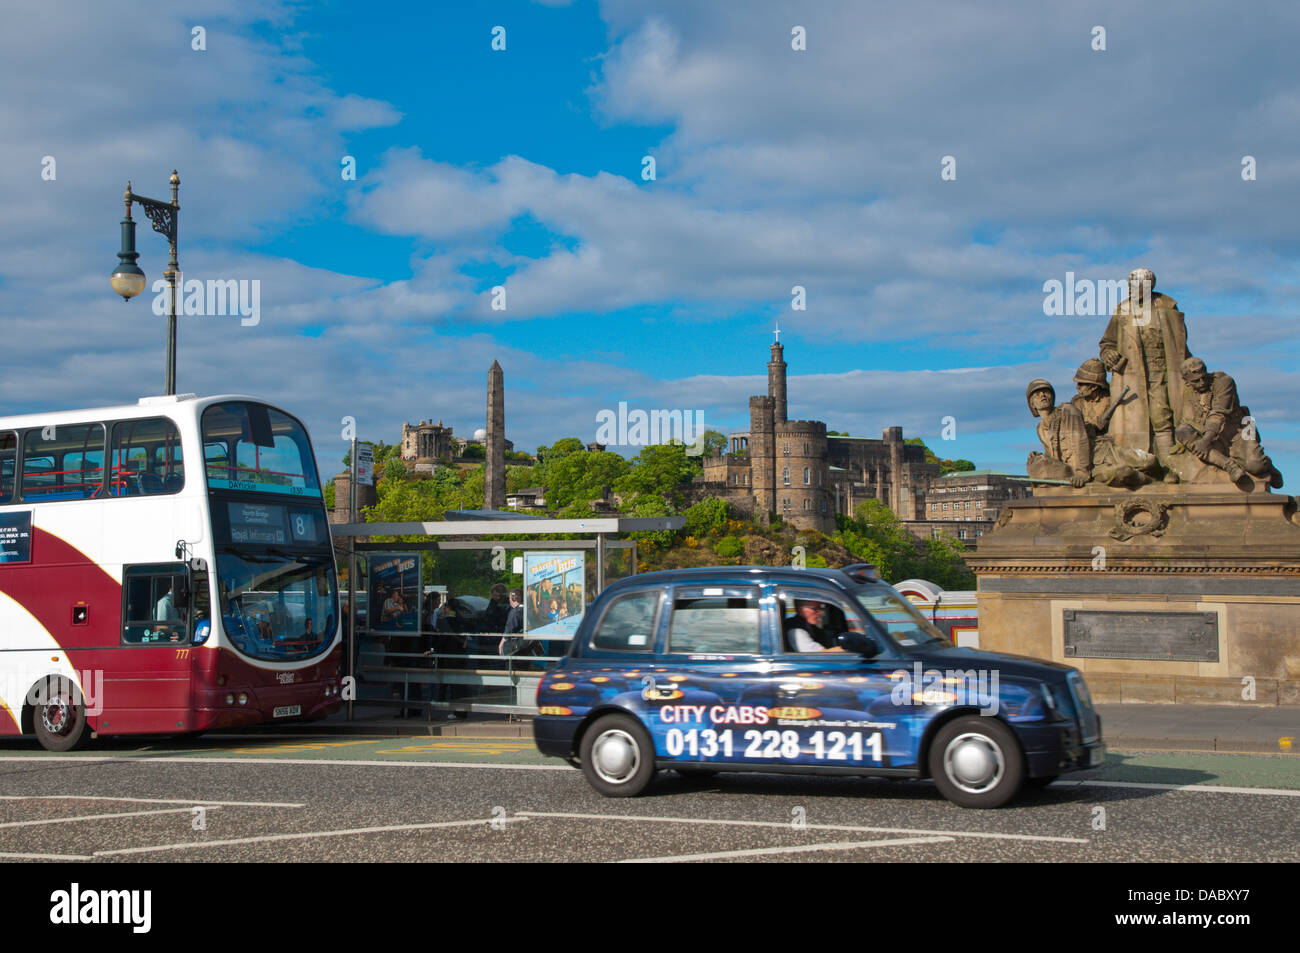 Bus and cab, North Bridge, Edinburgh, Scotland Europe Stock Photo